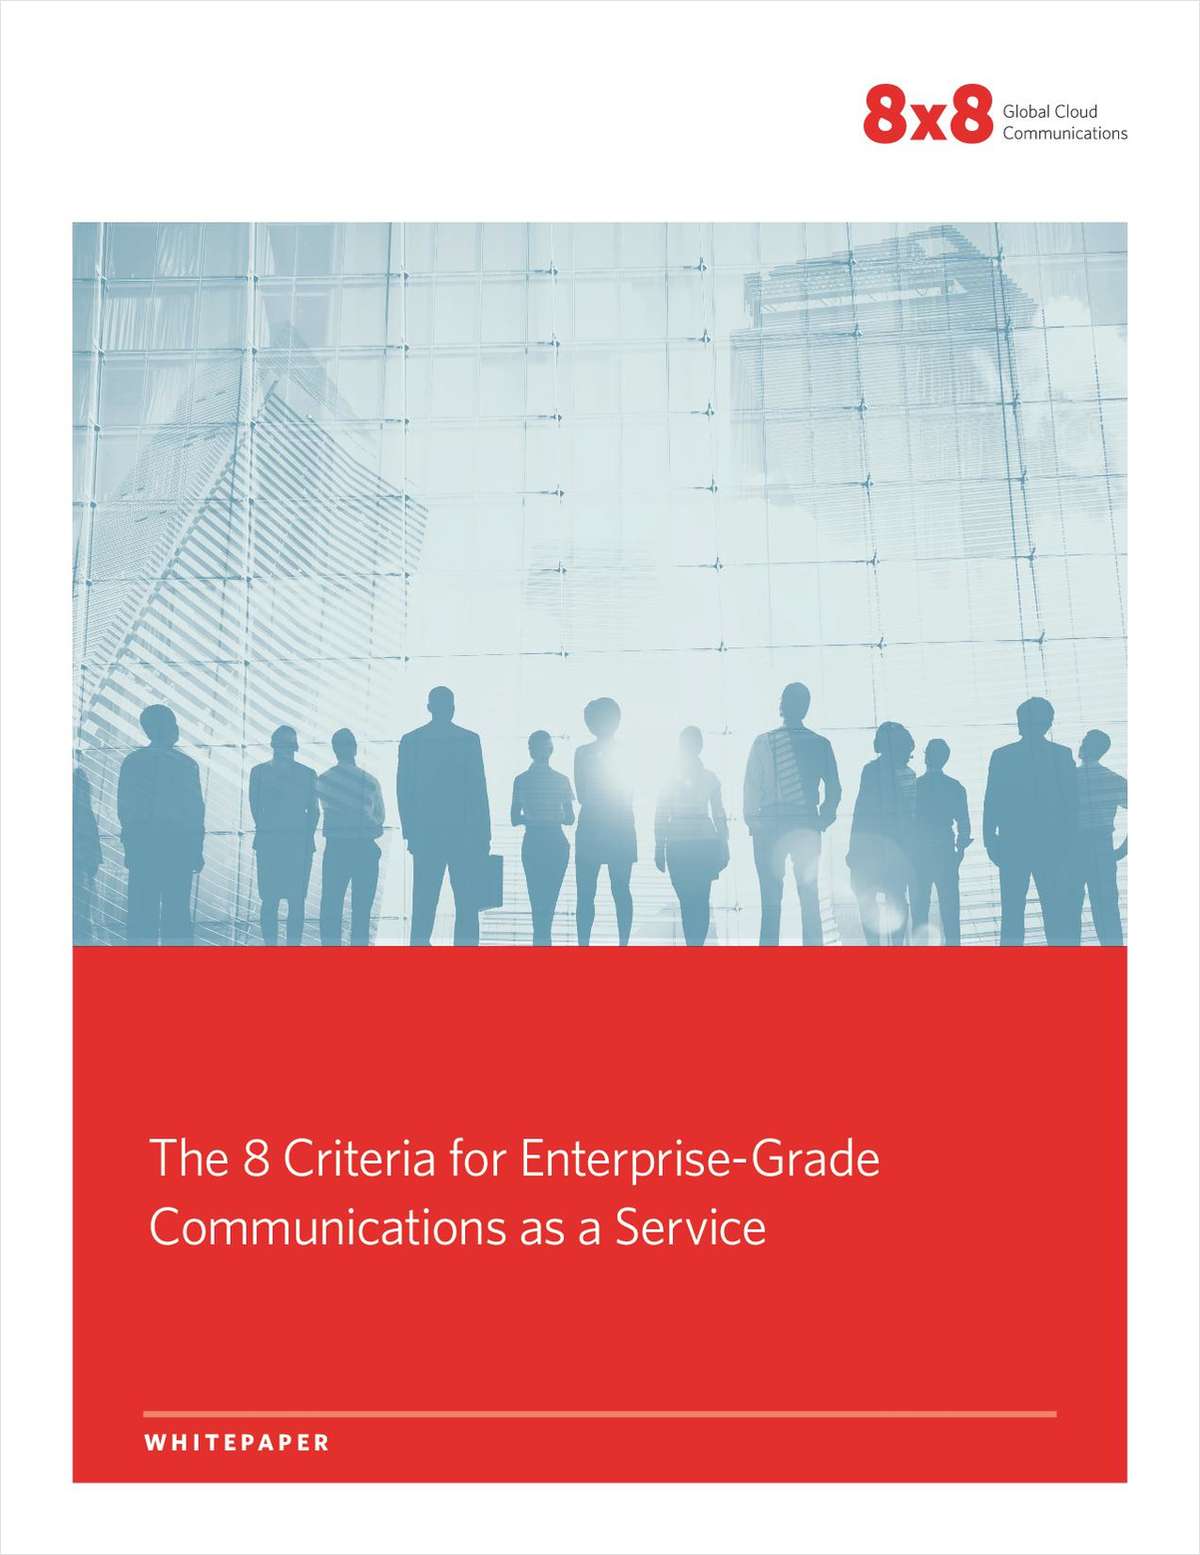 The 8 Criteria for Enterprise-Grade Communications as a Service